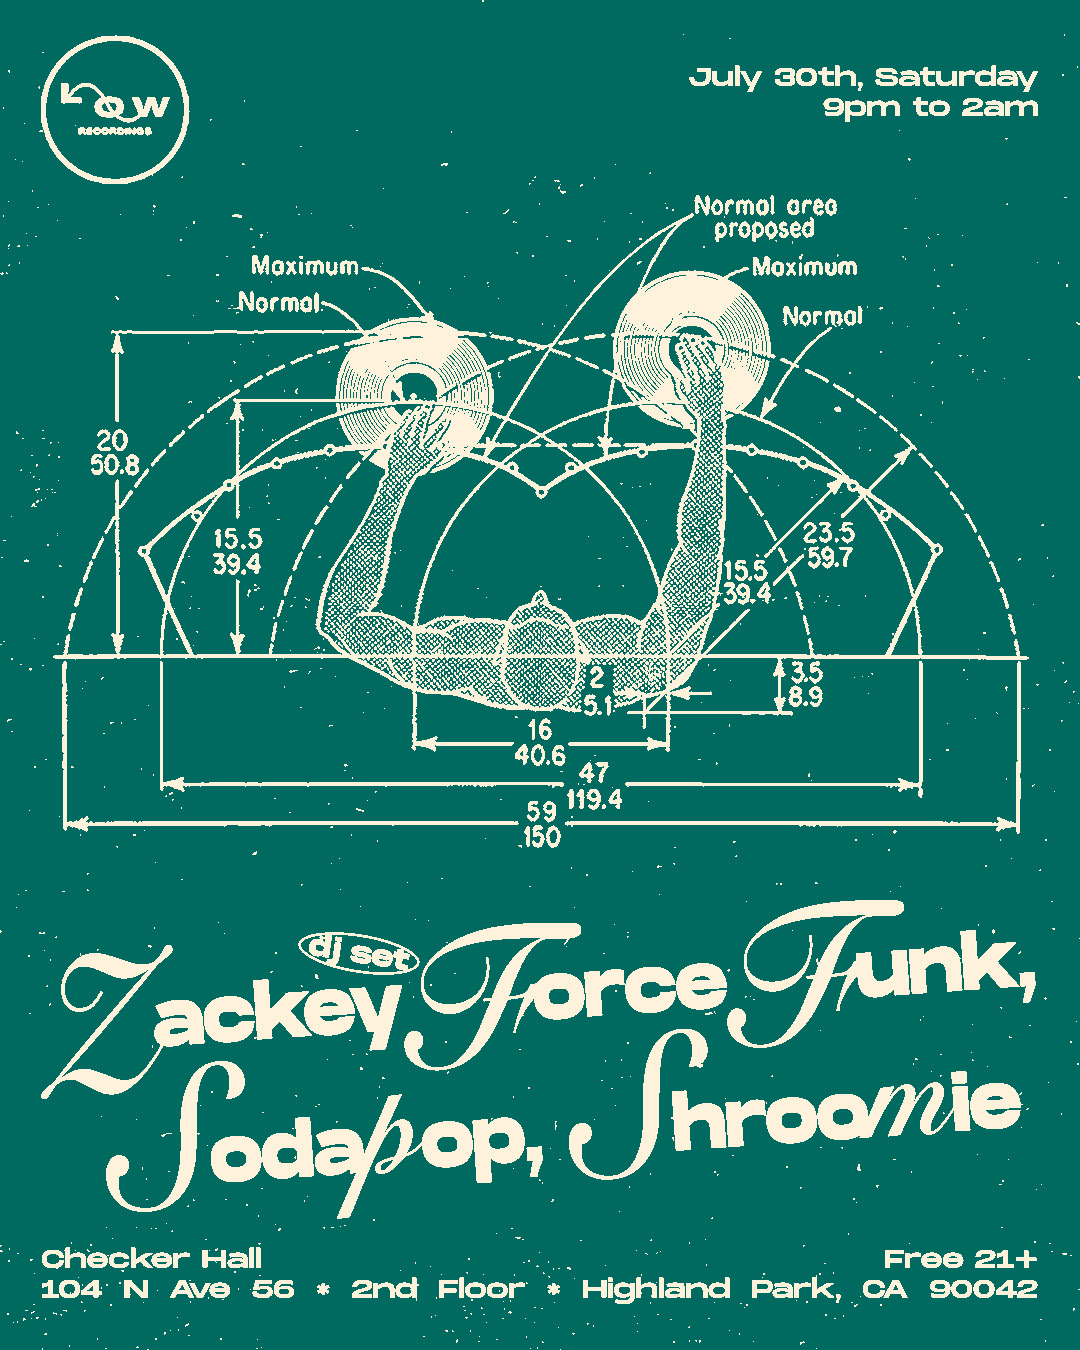 Low: Zacky Force Funk [DJ Set], Sodapop, Shroomie at Checker Hall 